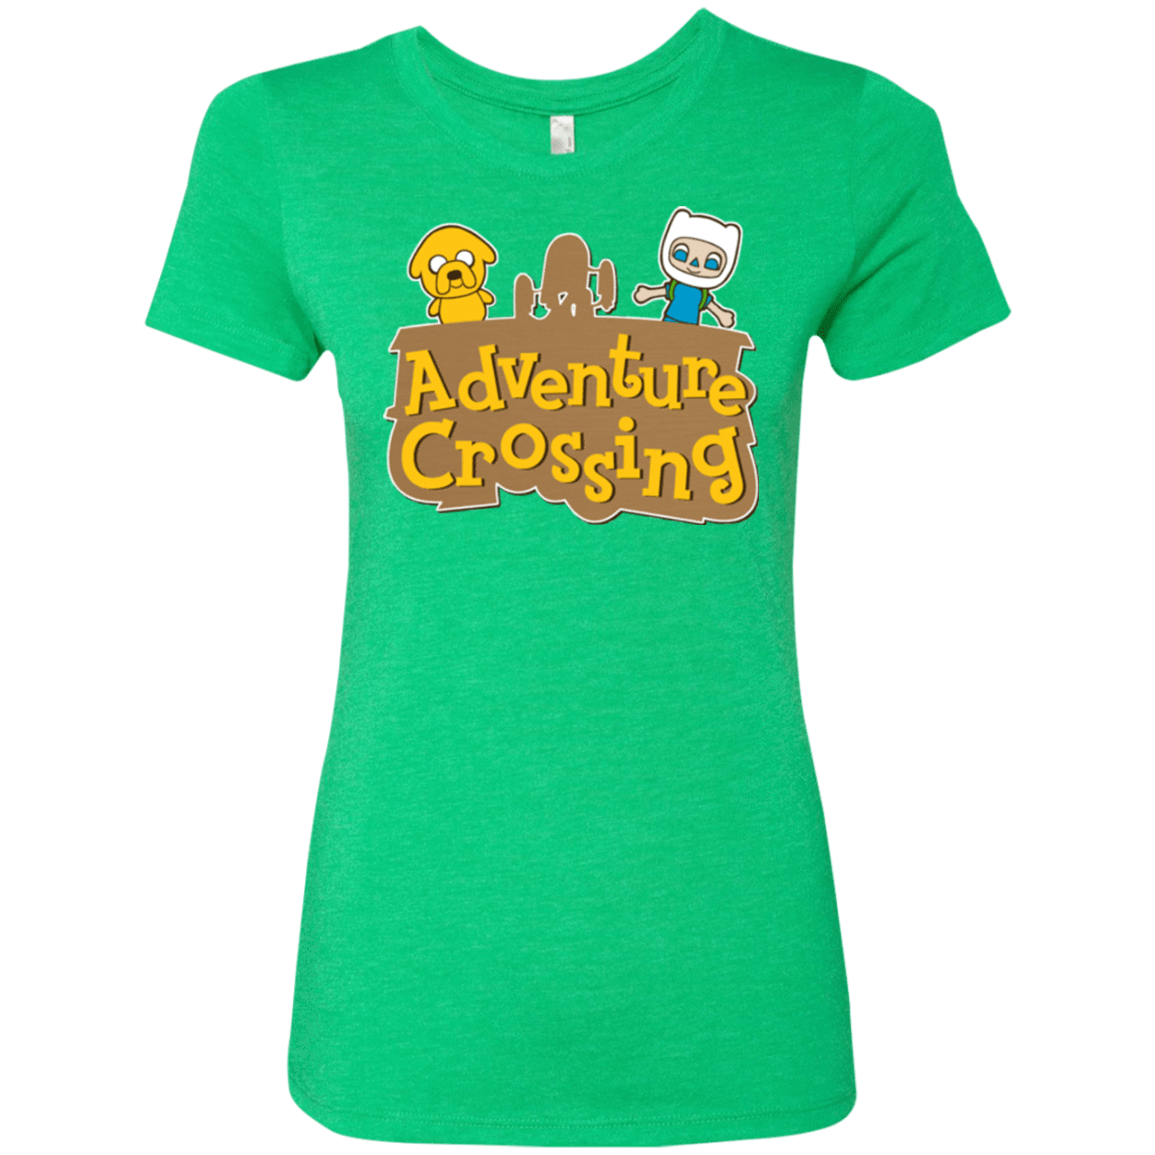 T-Shirts Envy / Small Adventure Crossing Women's Triblend T-Shirt